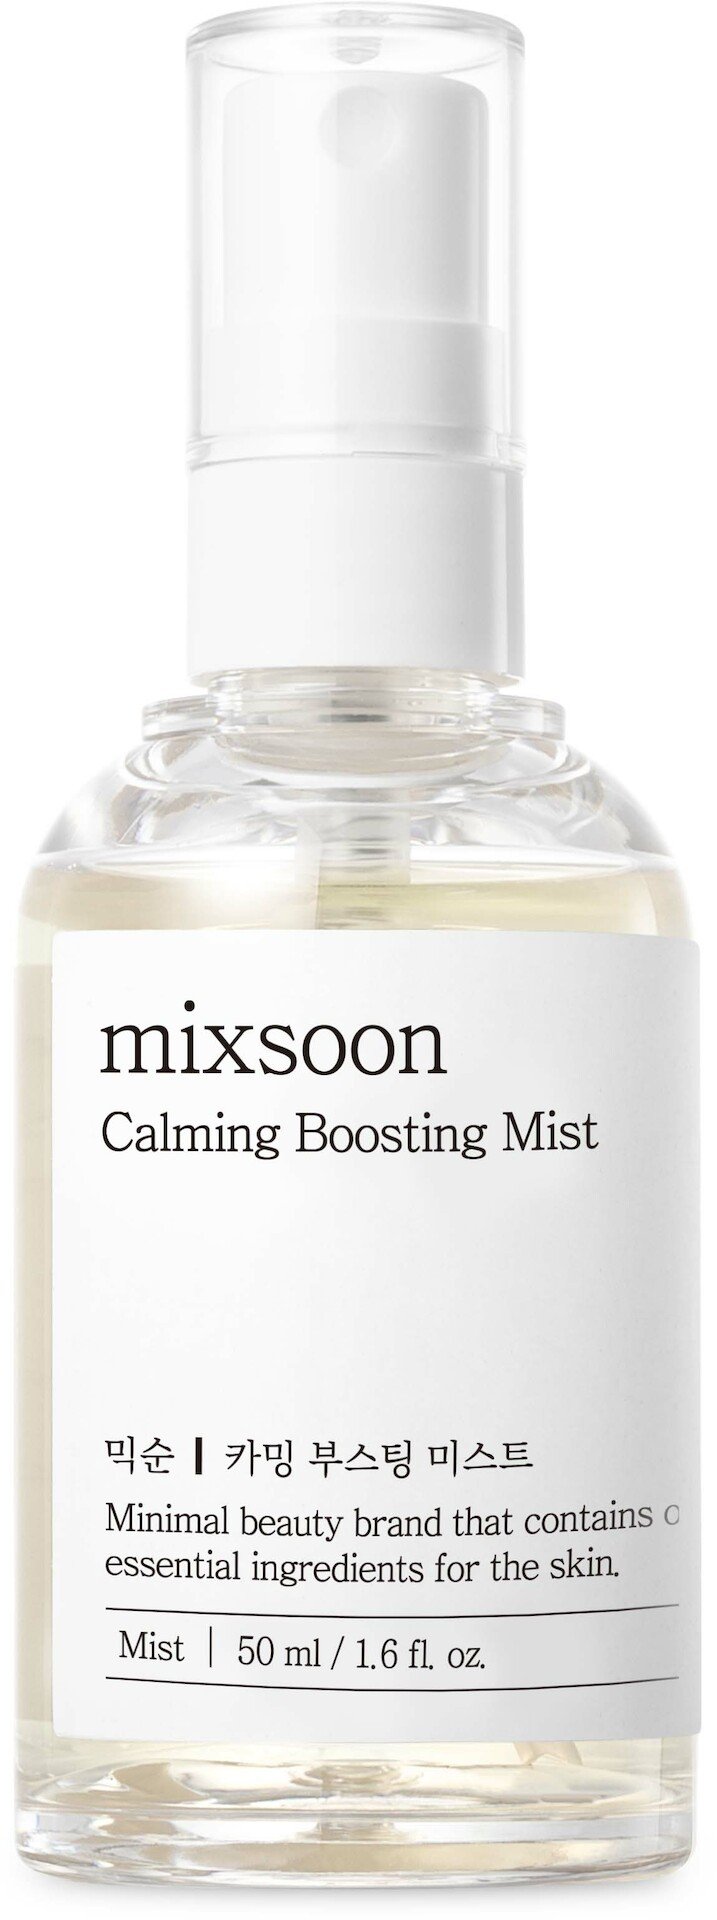 Mixsoon Calming Boosting Mist 50ml